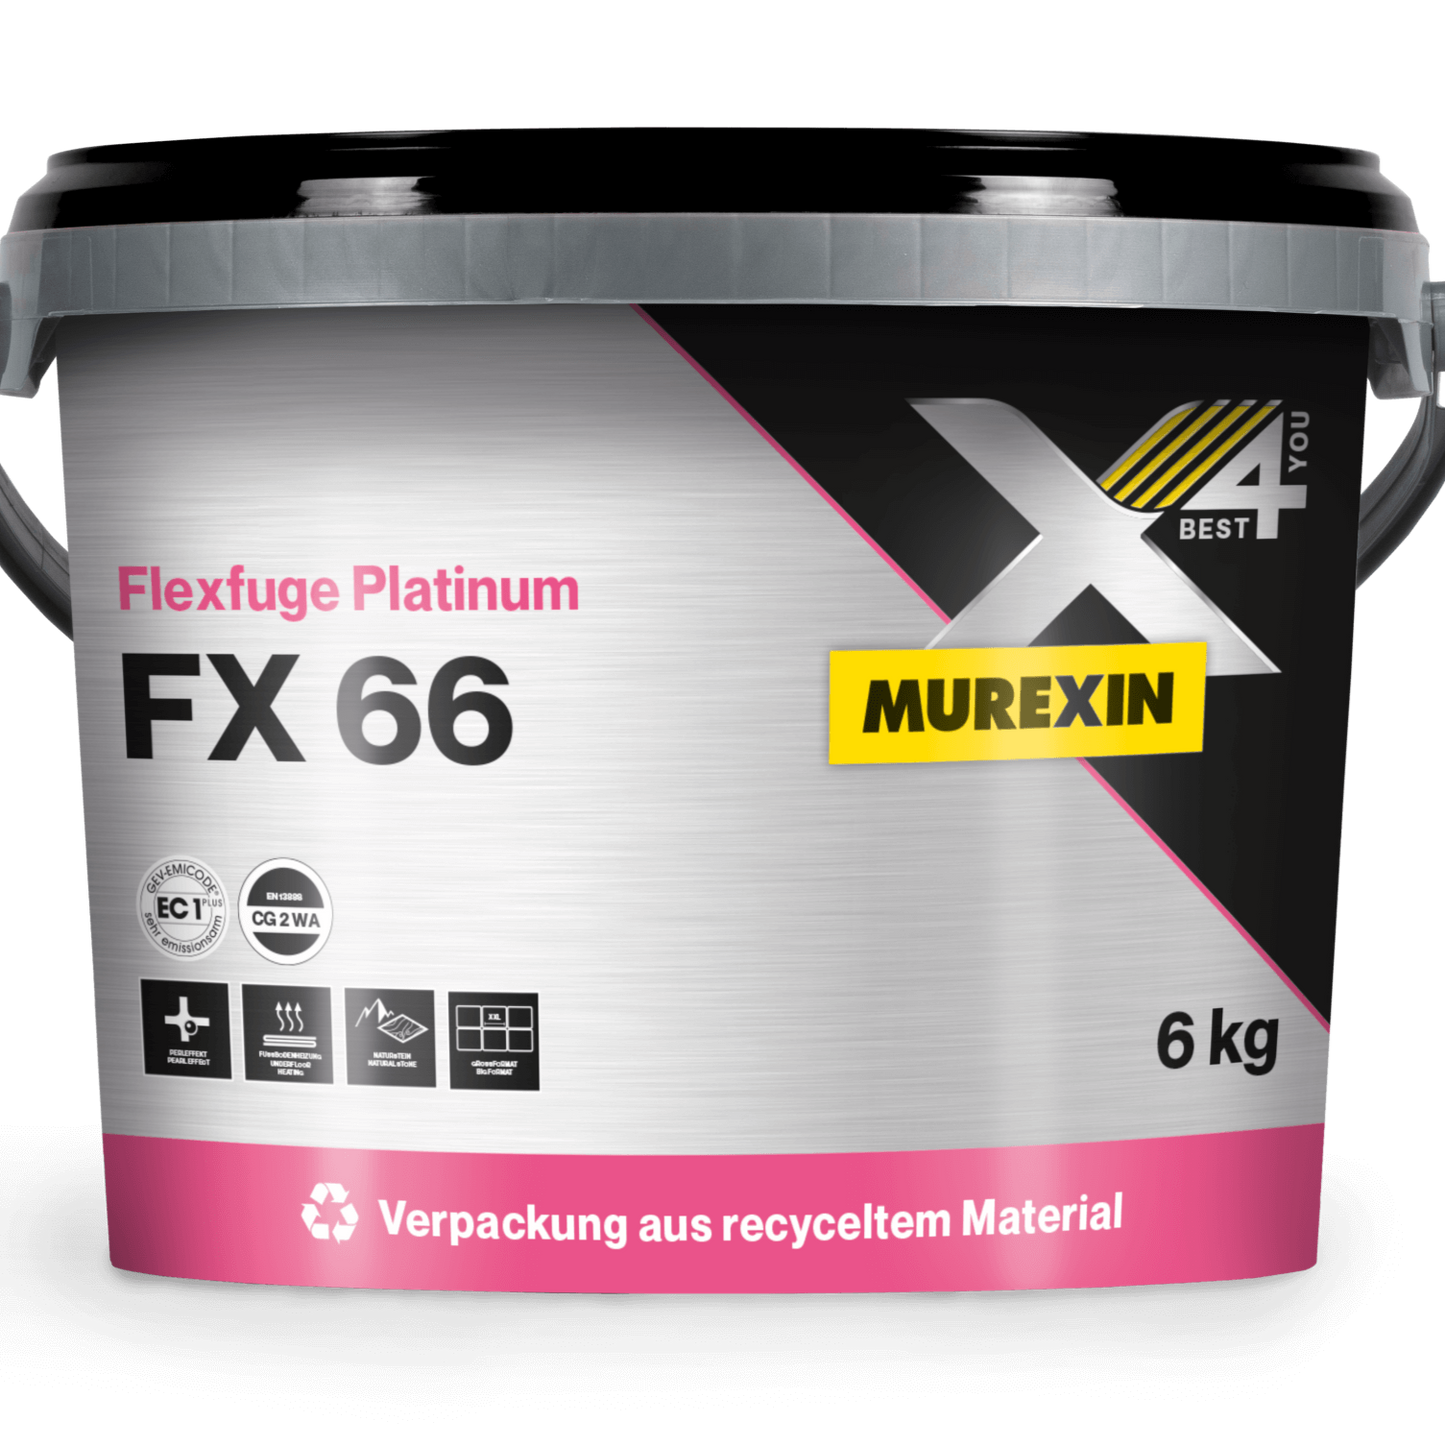 Flexfuge FX 66 - Murexin joint compound 6 kg 